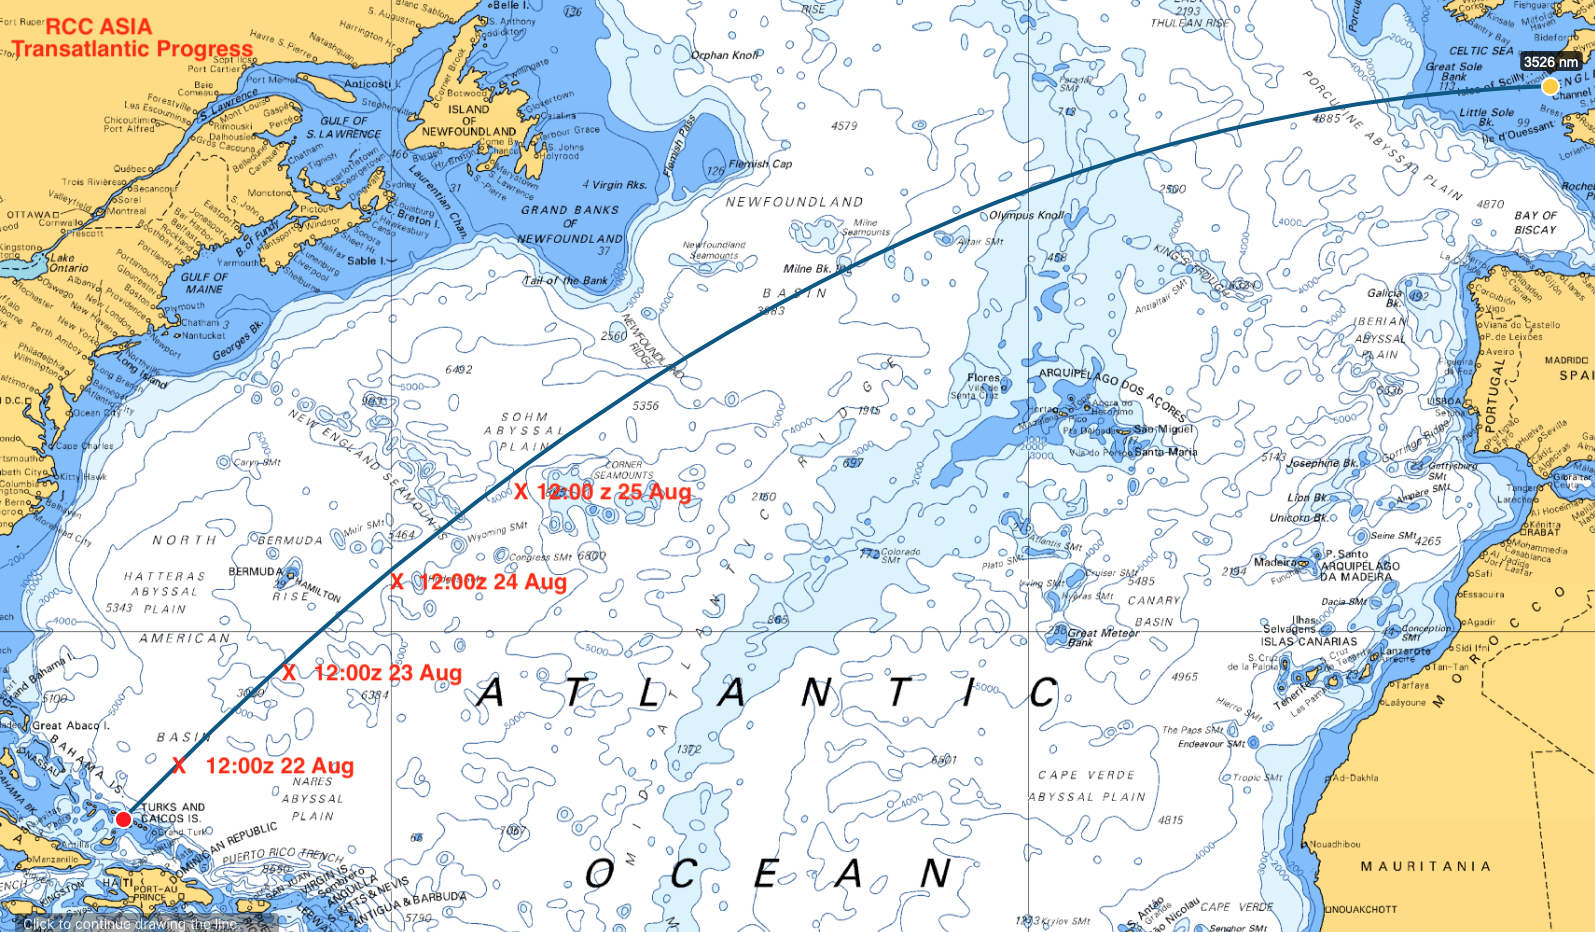 RCC ASIA Atlantic Progress.png